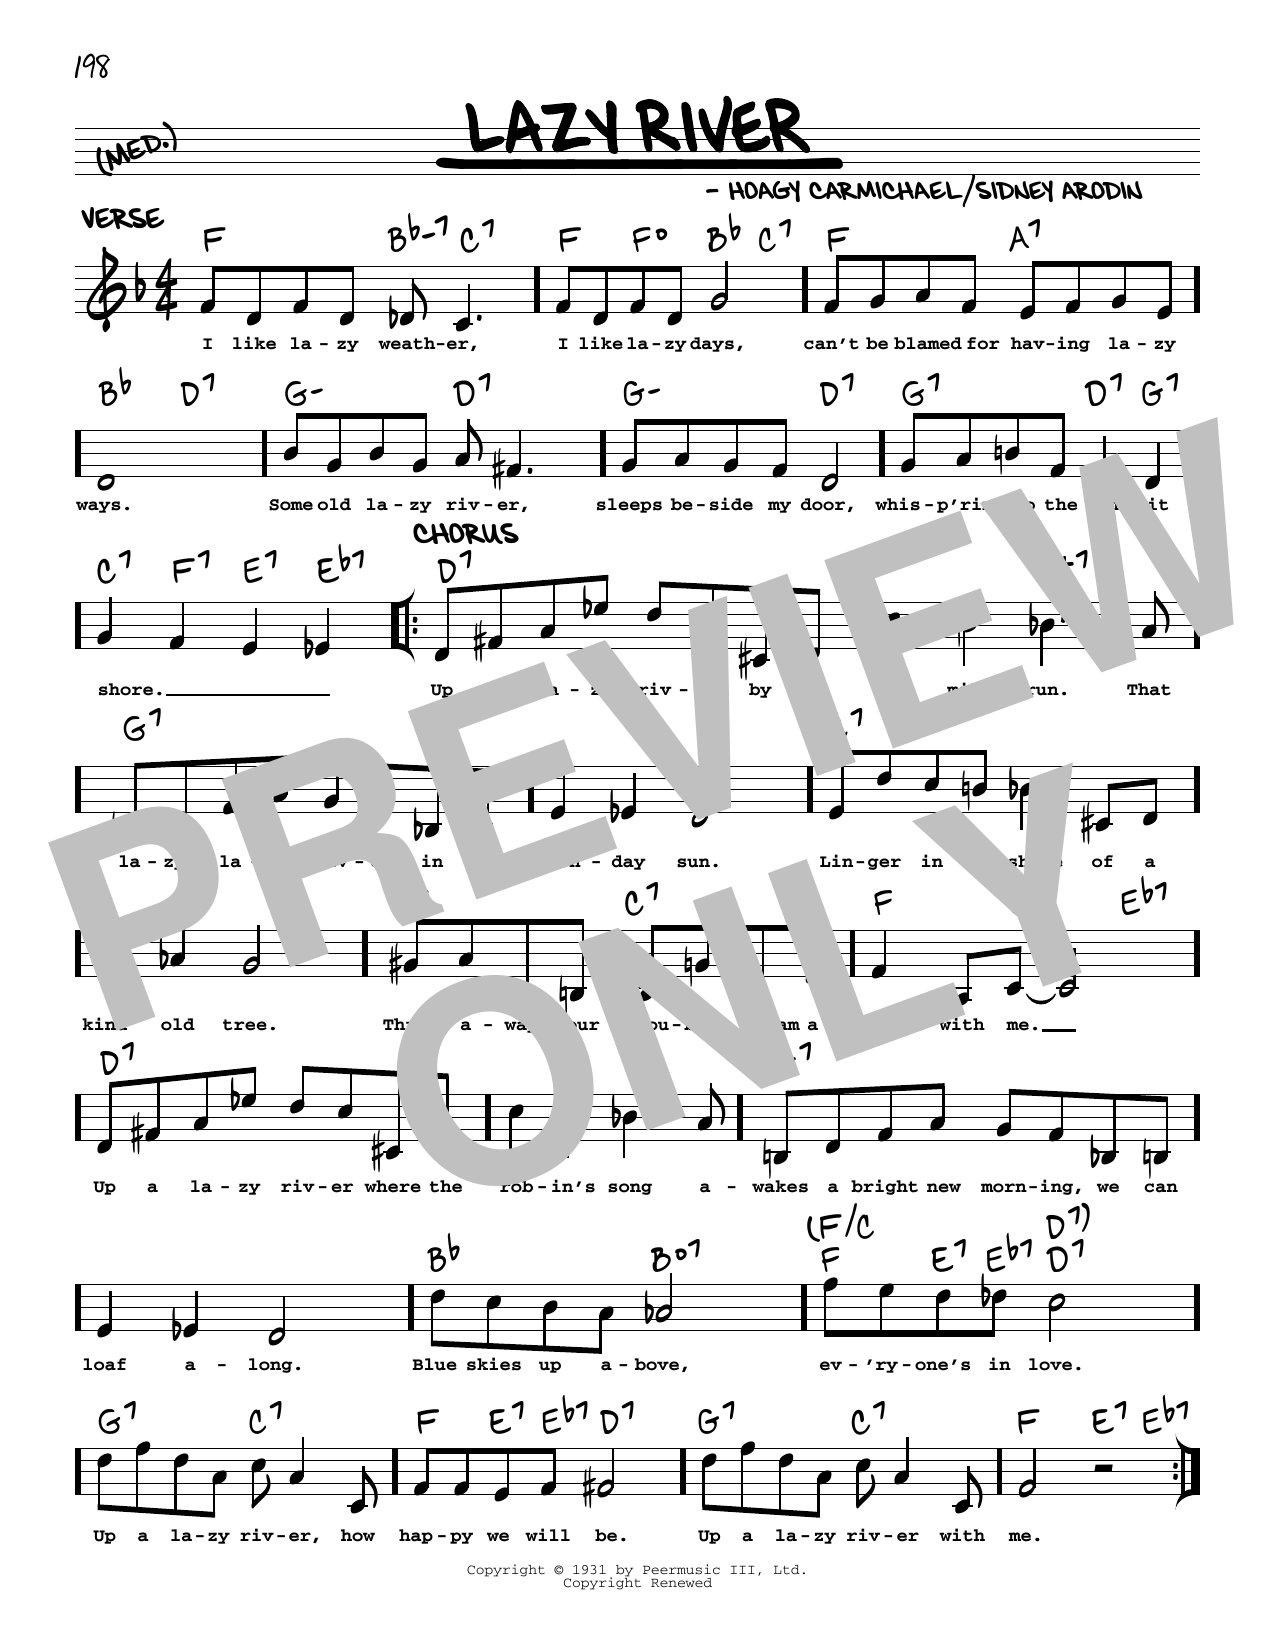 Bobby Darin Lazy River (arr. Robert Rawlins) Sheet Music Notes & Chords for Real Book – Melody, Lyrics & Chords - Download or Print PDF